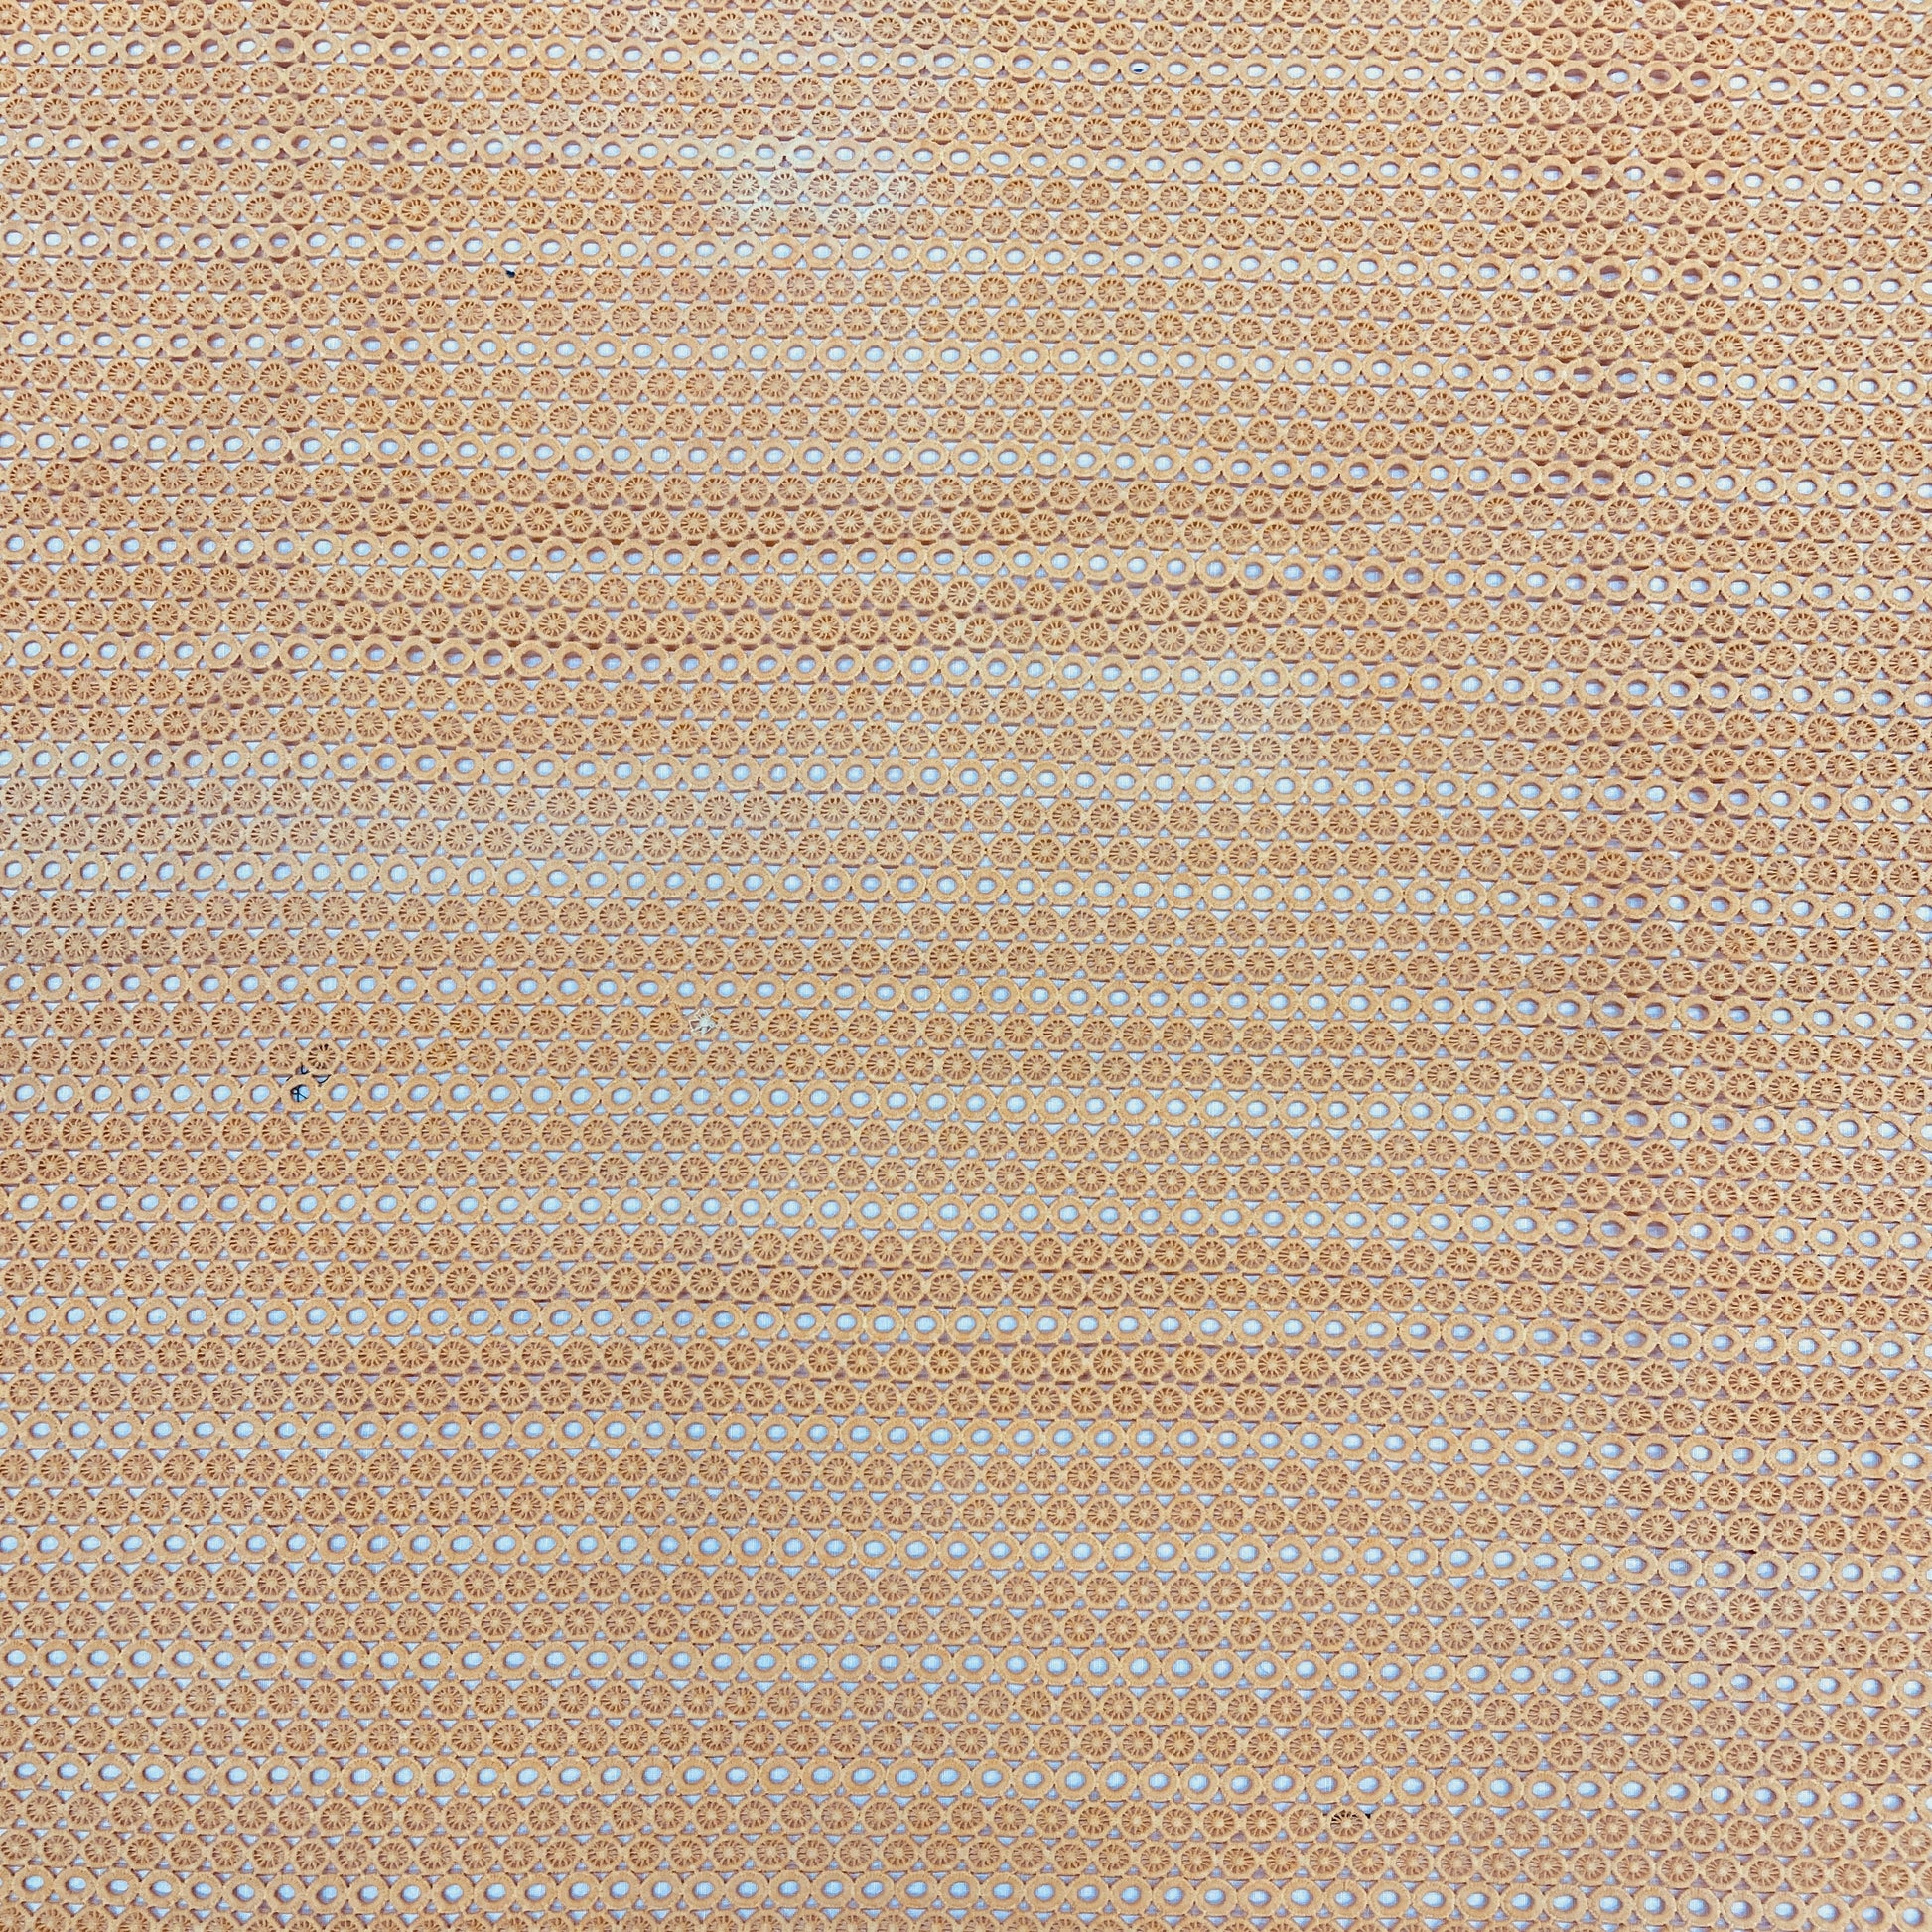 Cantaloupe Orange Floral Print Crochet Fabric - TradeUNO